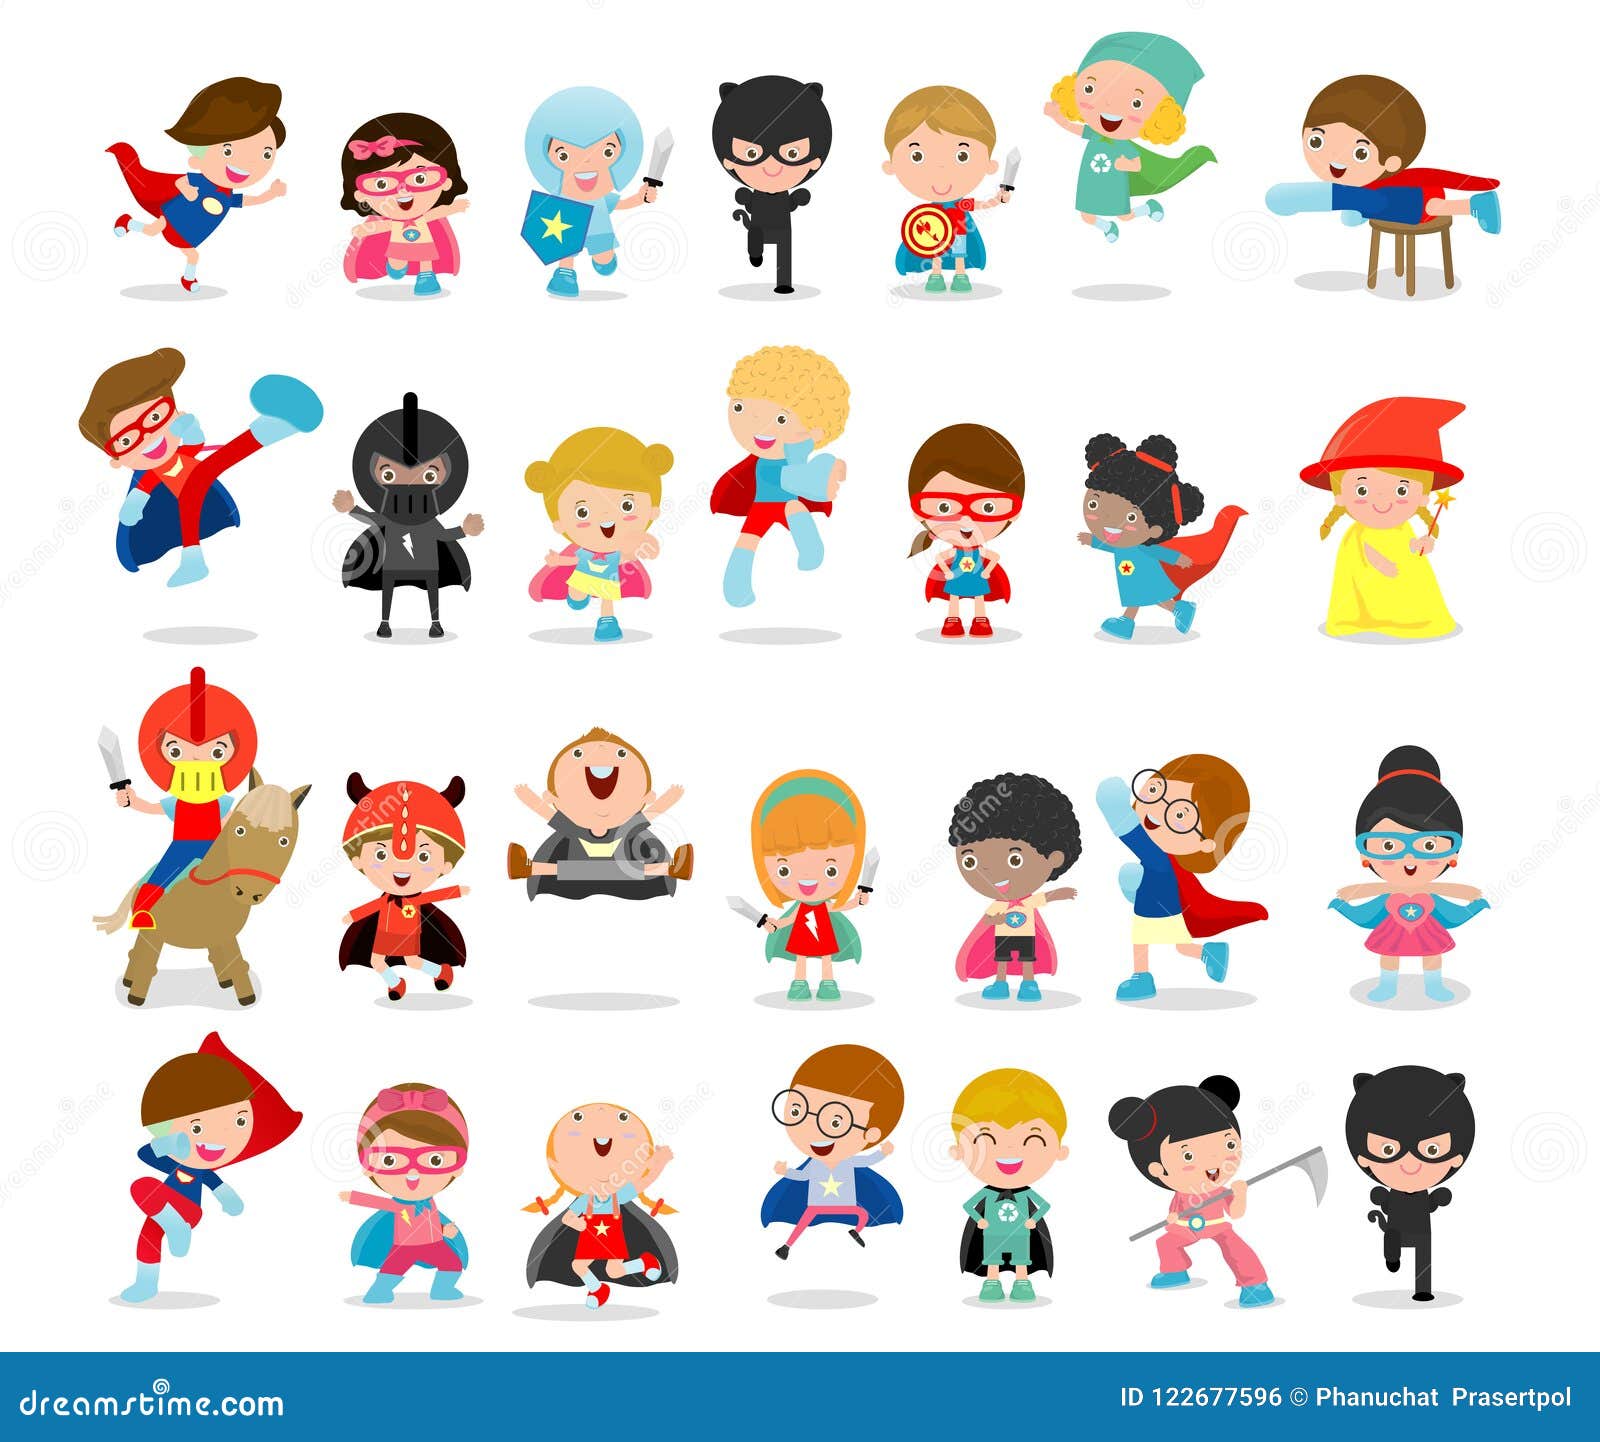 cartoon big set of kid superheroes wearing comics costumes,kids with superhero costumes set, kids in superhero costume characters